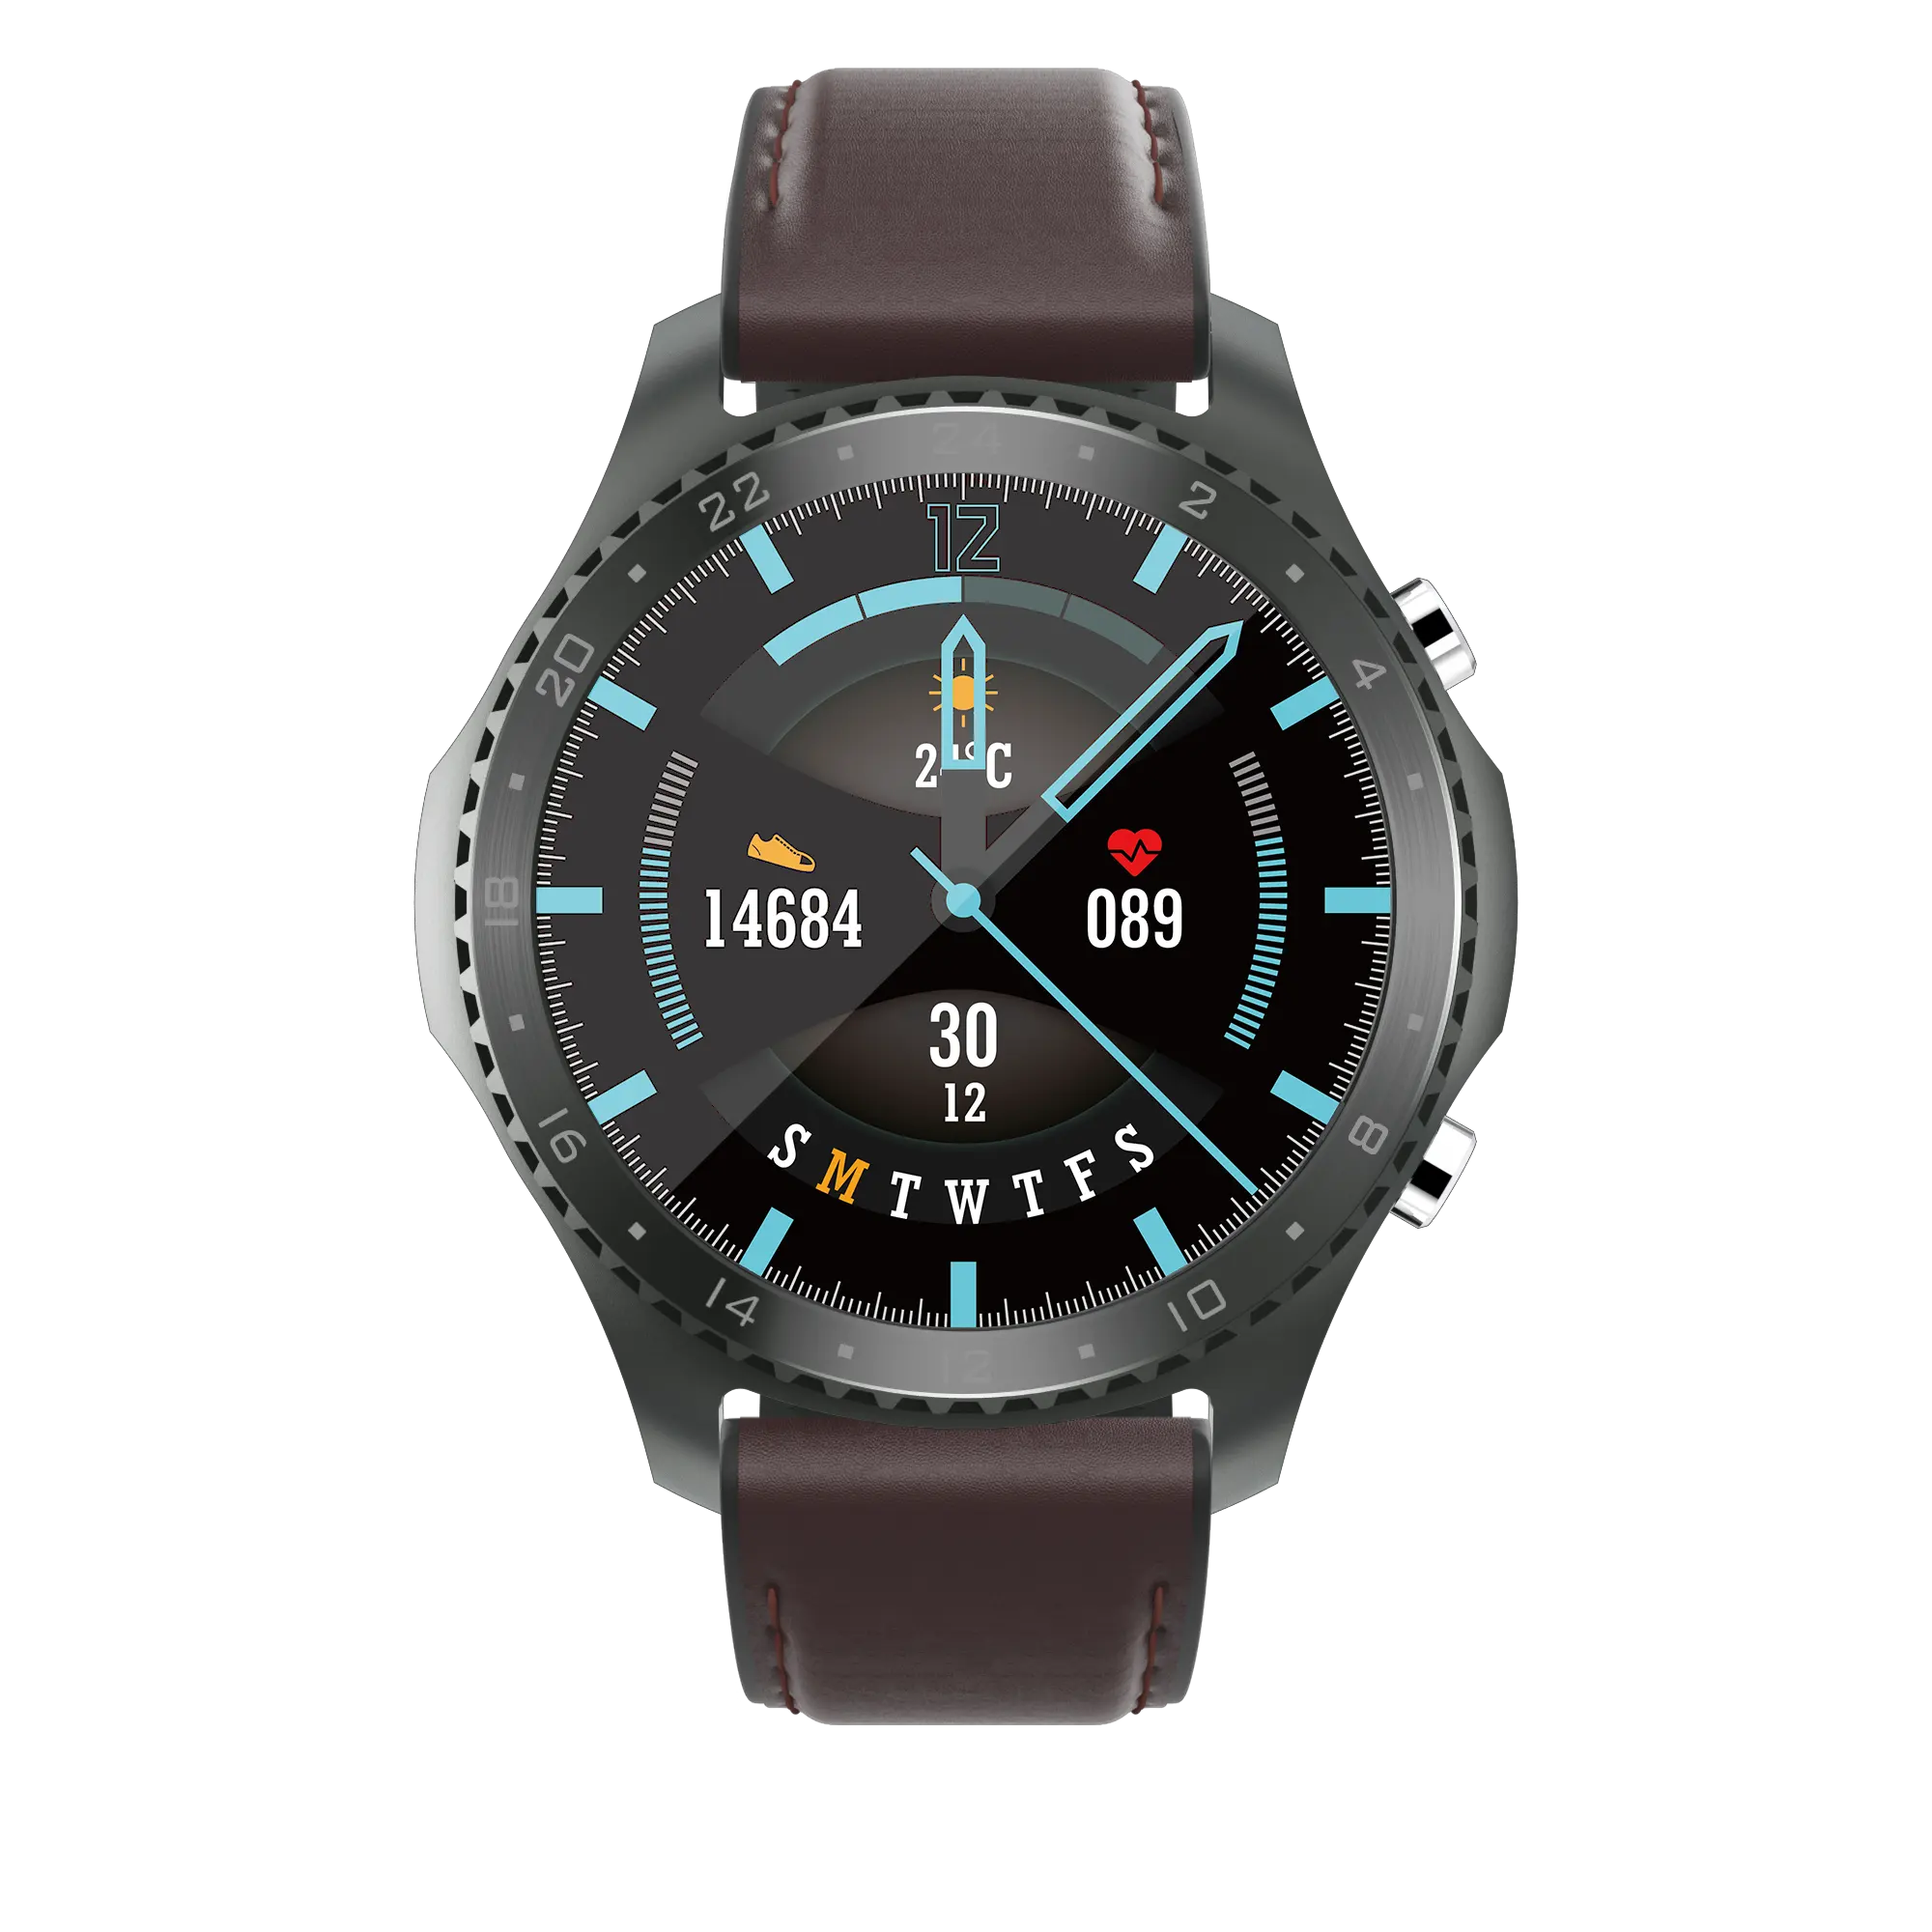 MV60 Online Aliexpress Lowest Price Reloj Para Life Citizen Eco-drive Black Dial Smartwatch Ecg Ppg Heart Rate IP68 Smart Watch